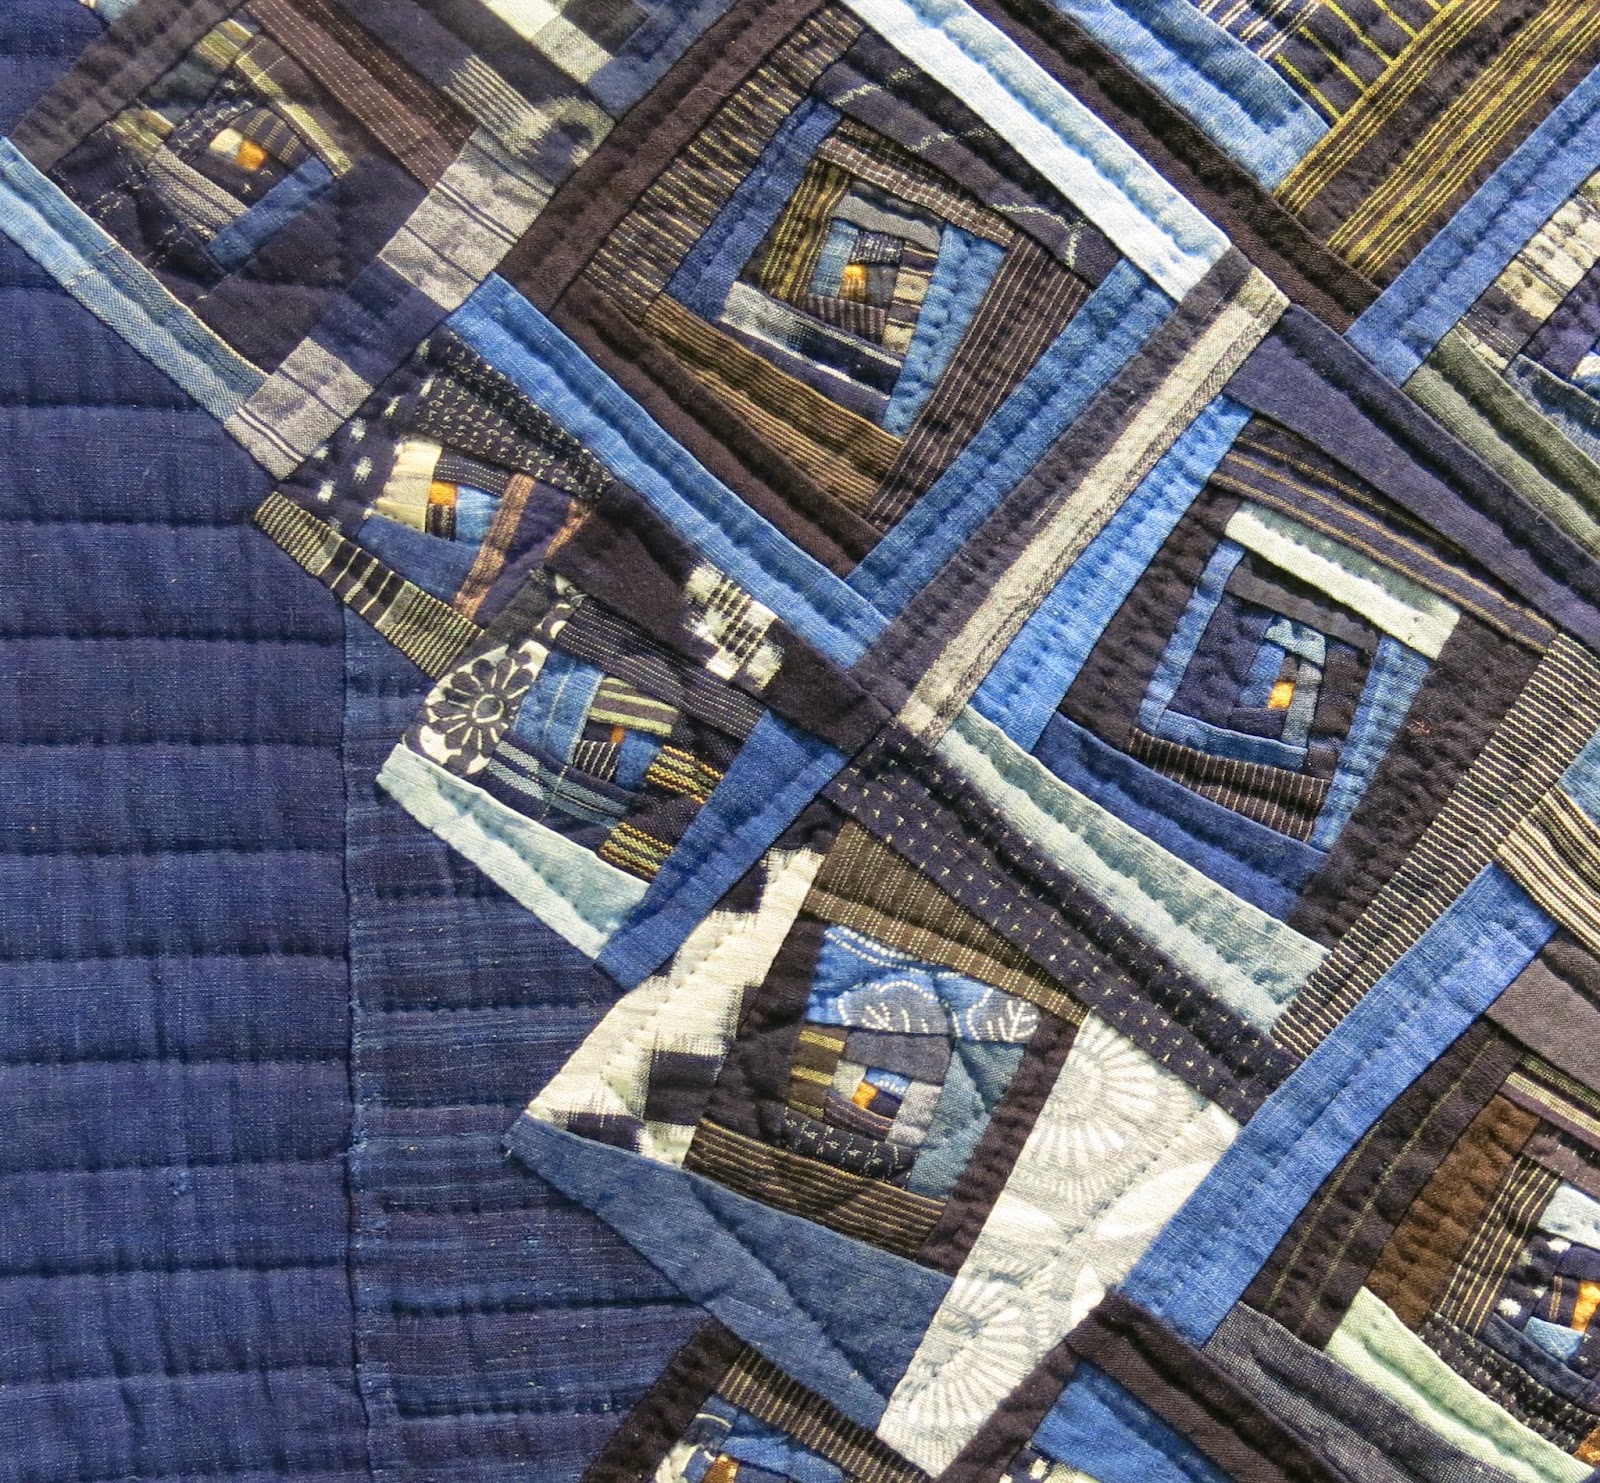 Quilt exhibition in Nantes - Tomie Nagano's indigo quilts